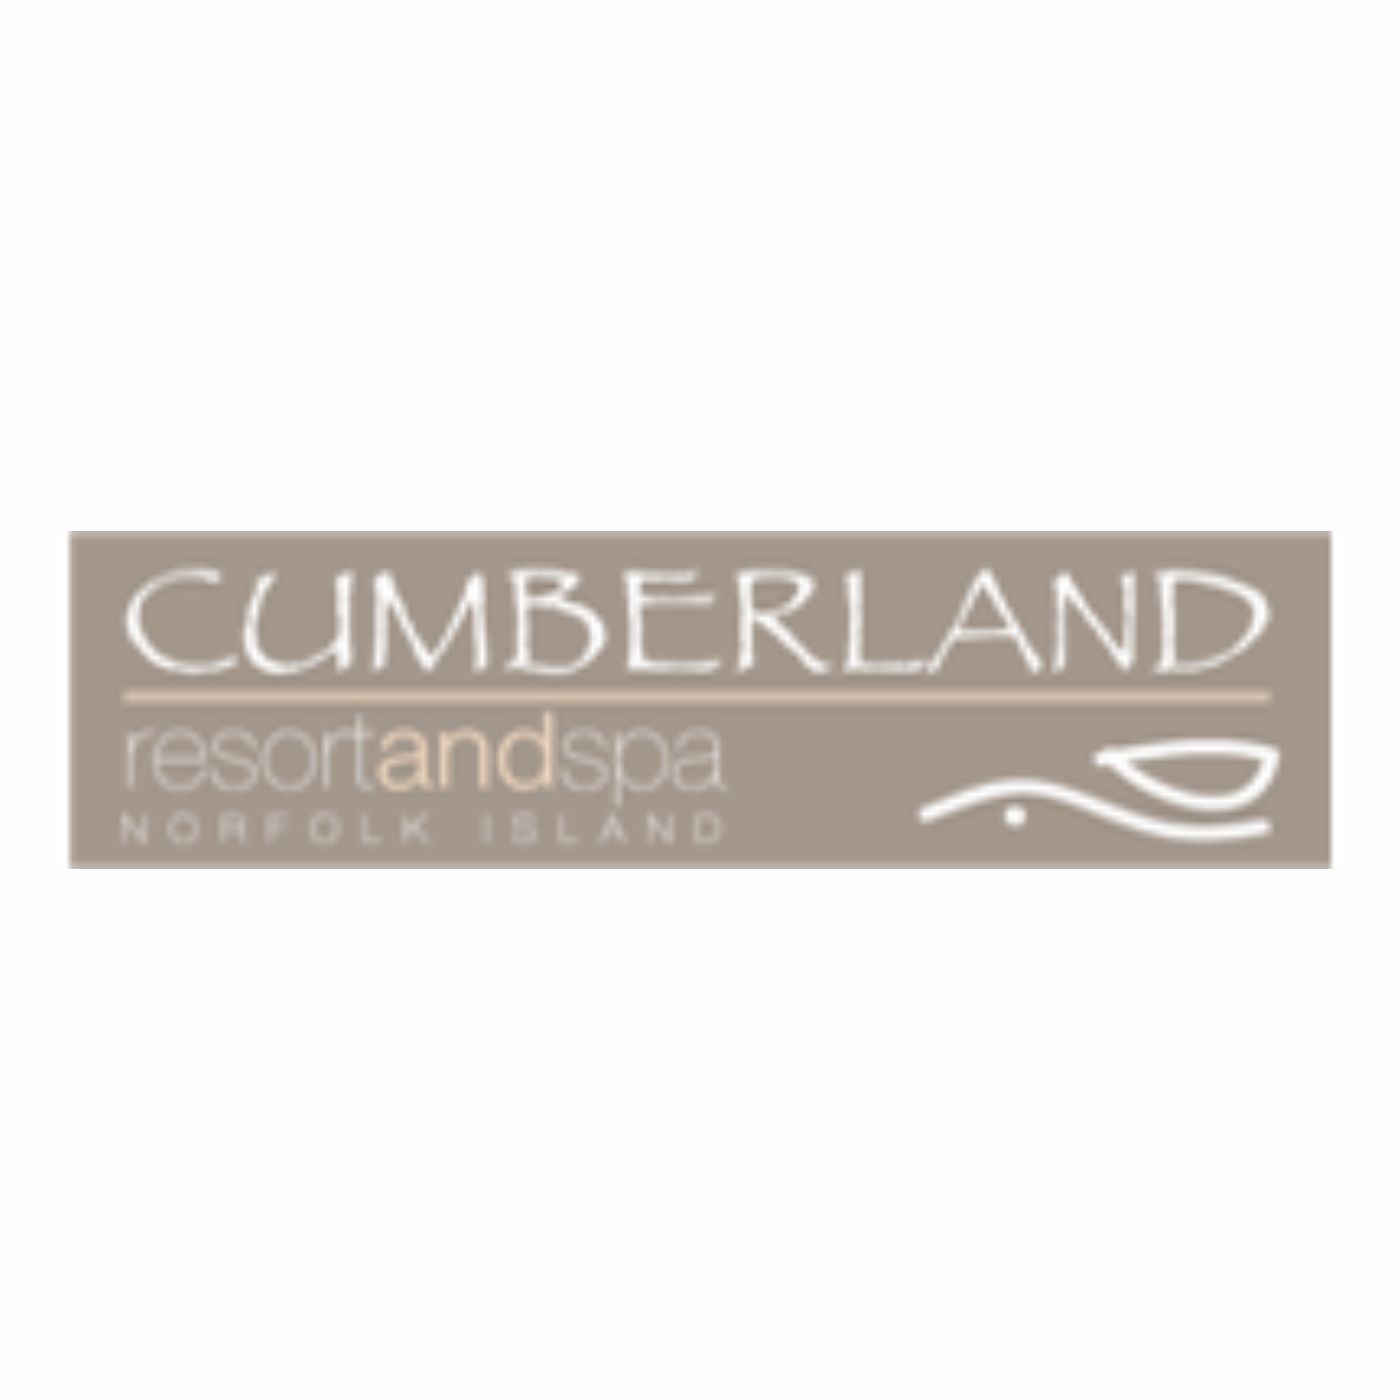 Cumberland Resort and Spa